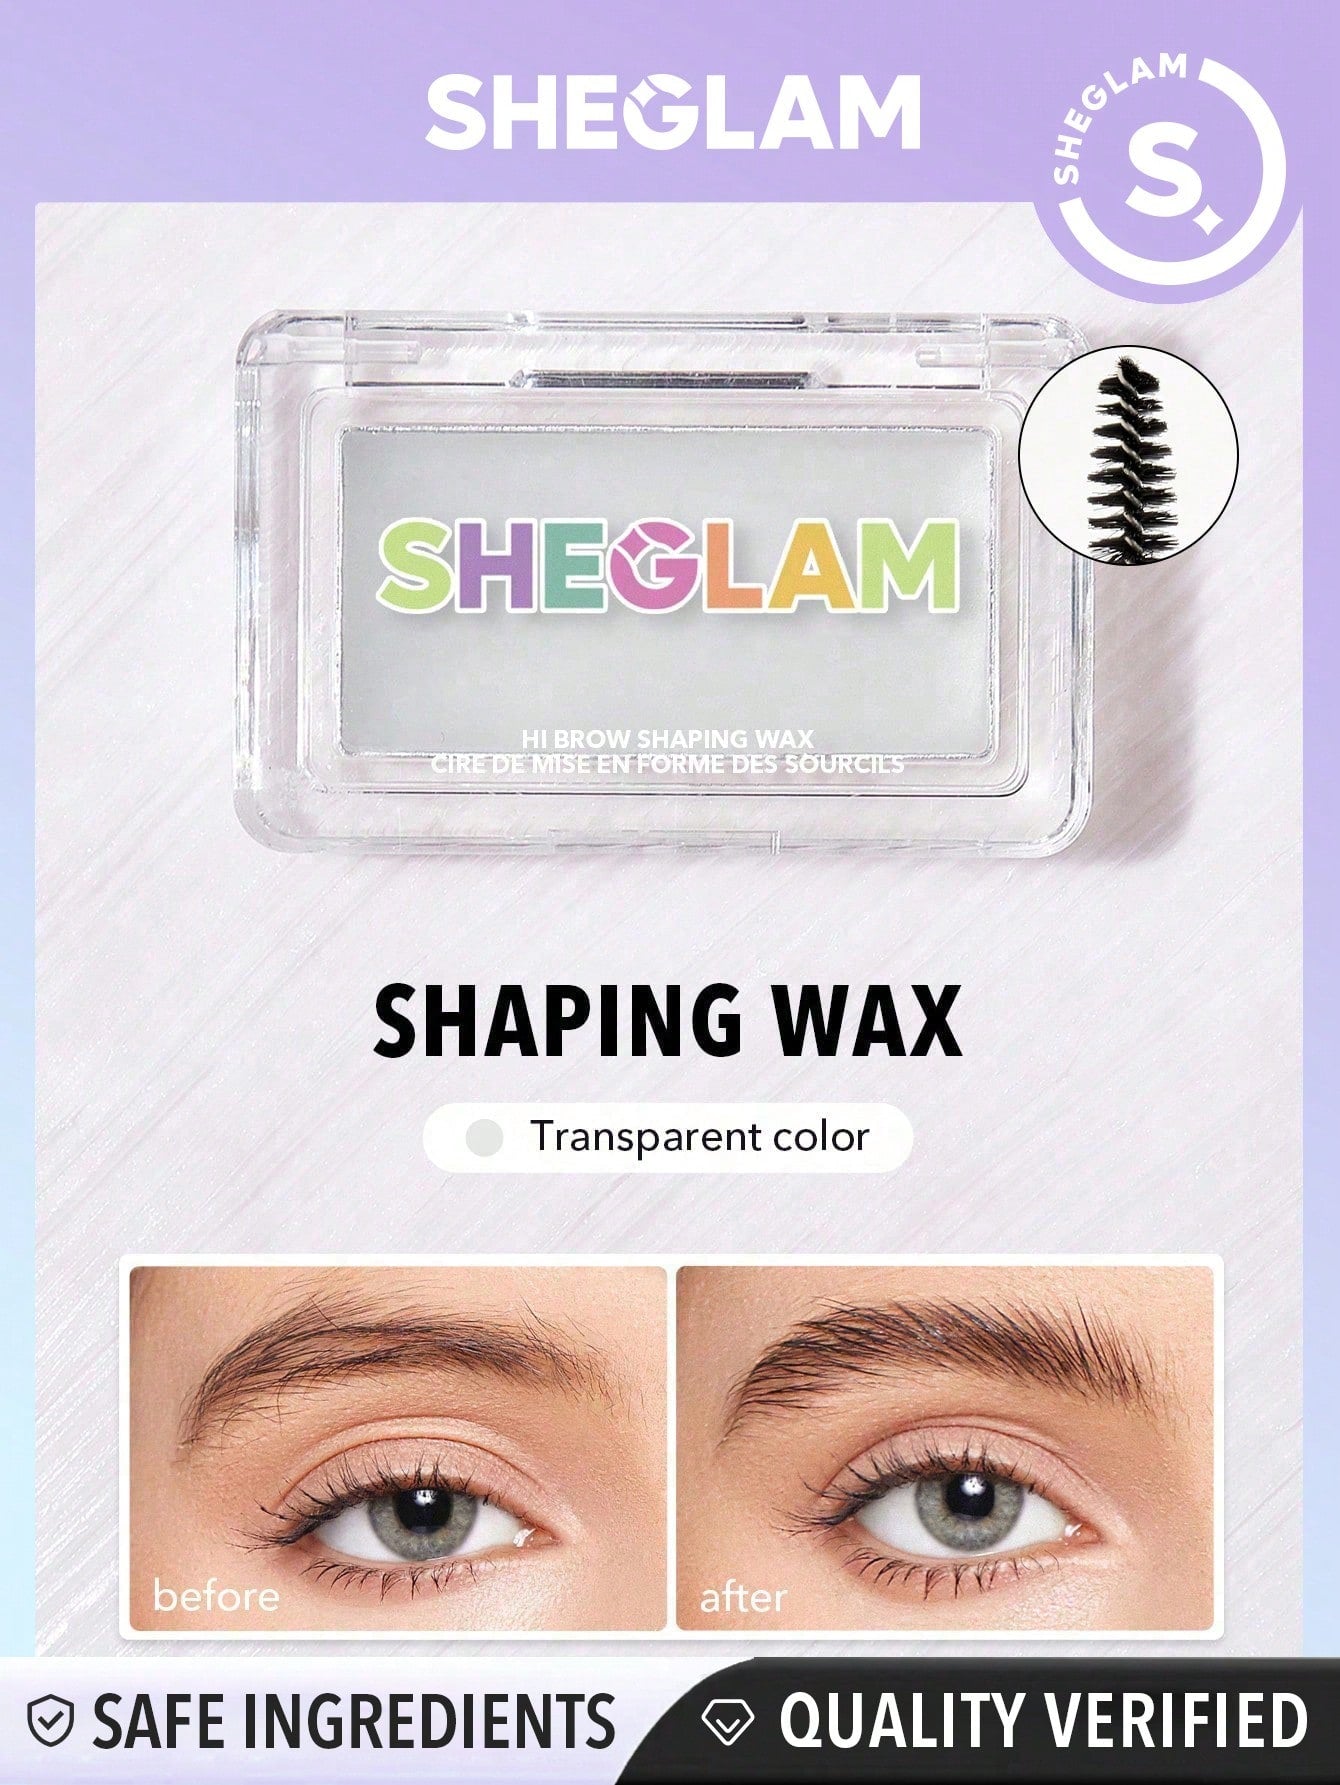 SHEGLAM Hi Brow Shaping Wax - Negative Apparel